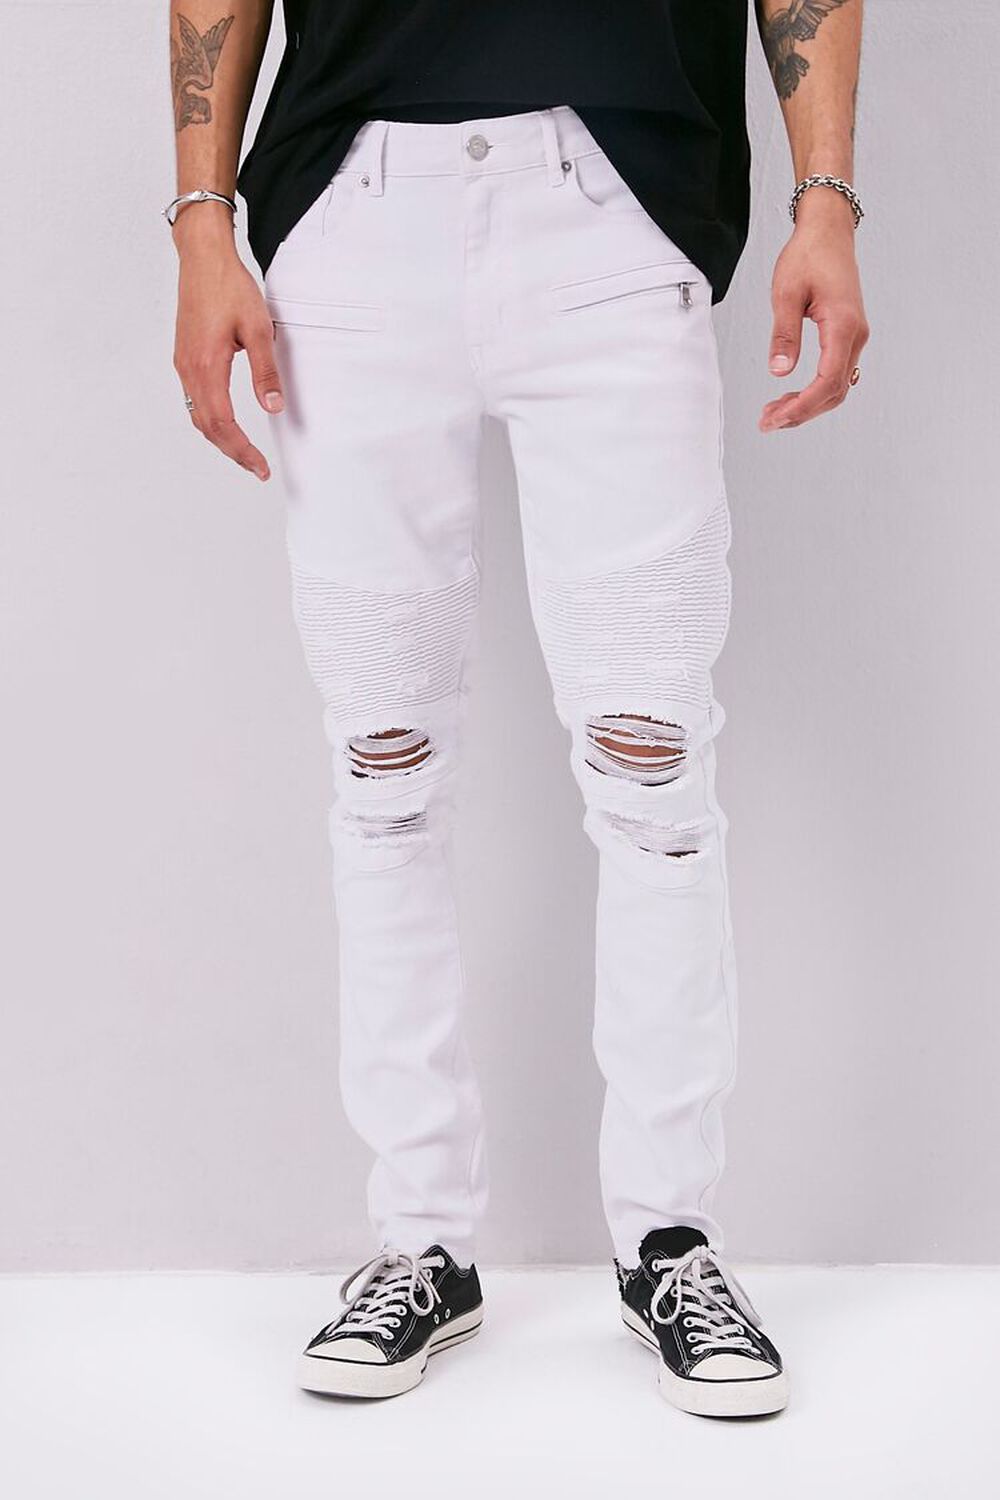 WHITE Distressed Moto Skinny Jeans, image 2